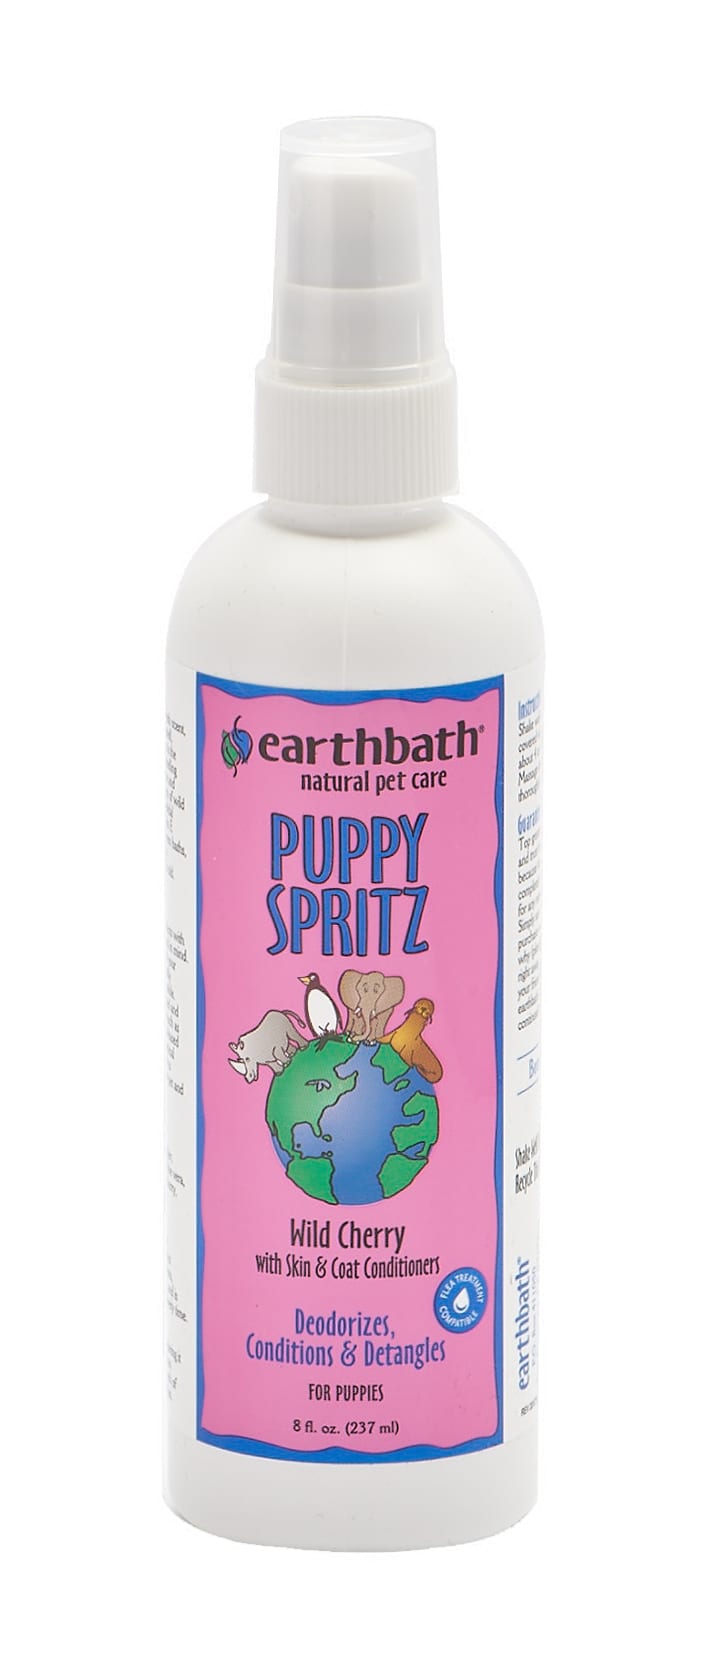 Earthbath Puppy Spritz Wild Cherry With Skin & Coat Conditioners 8oz